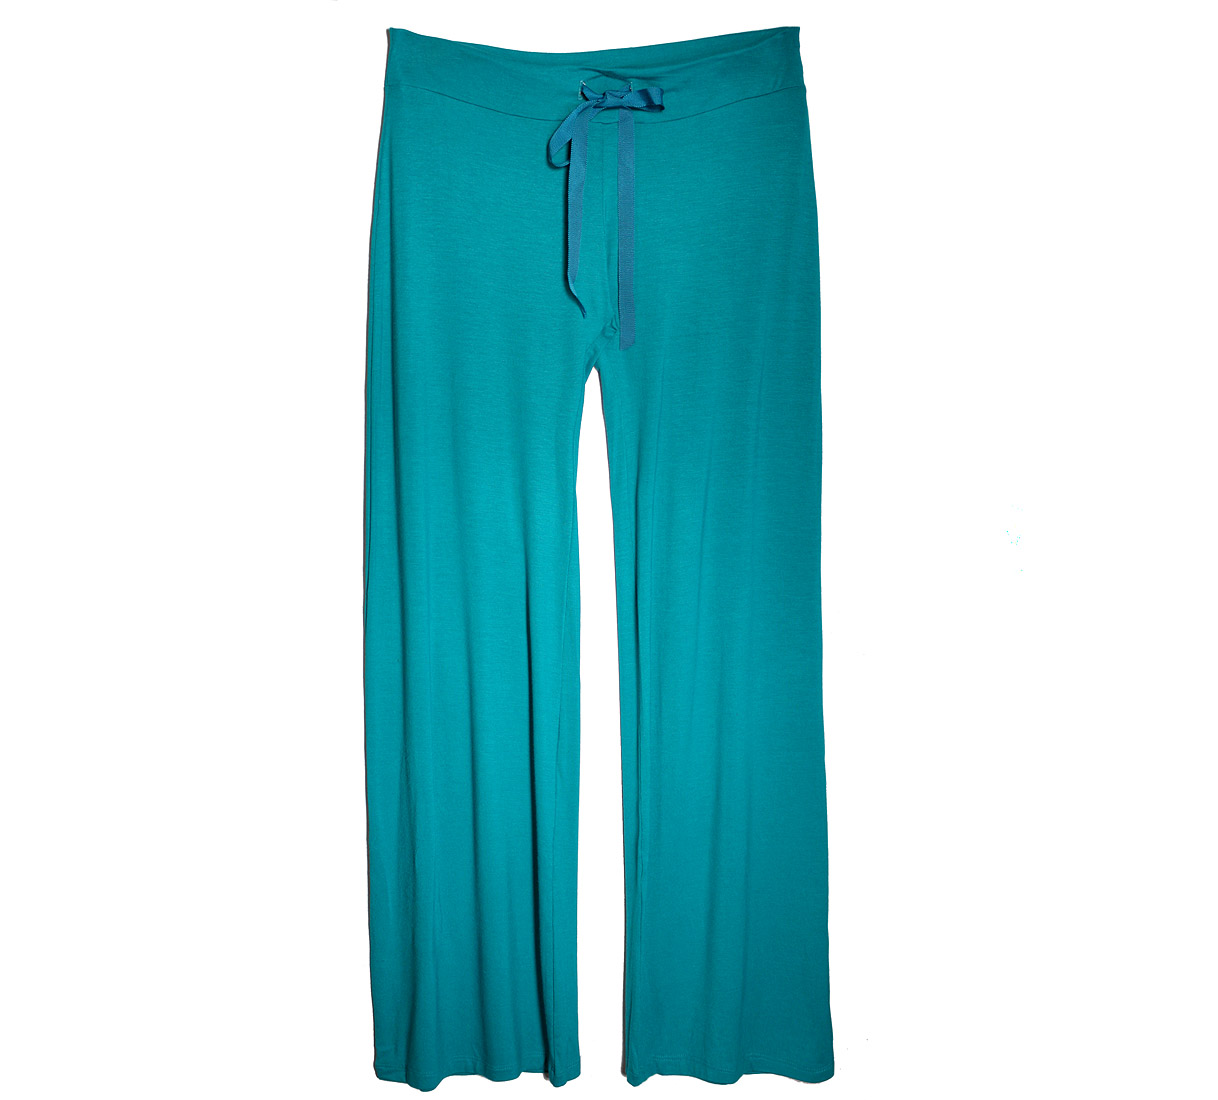 Matchplay Marine Lounge Pant | Luxurious Jersey Knit Lounge Wear | Between the Sheets Designer Sleepwear